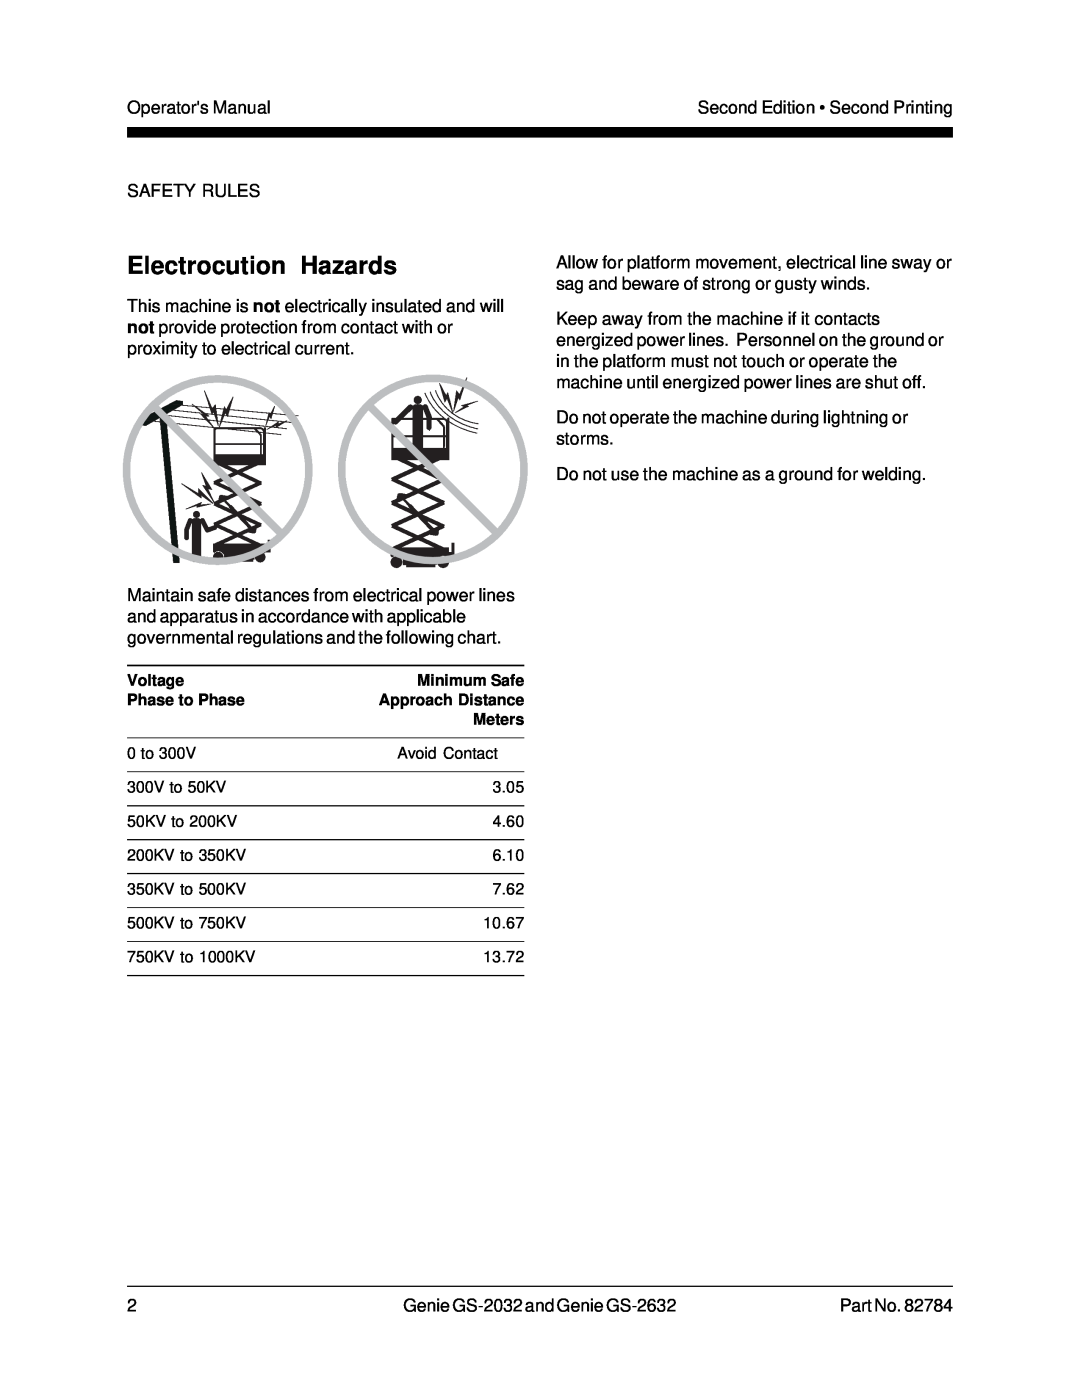 Genie CE, 82784, GS-2032, GS-2632 manual Electrocution Hazards 